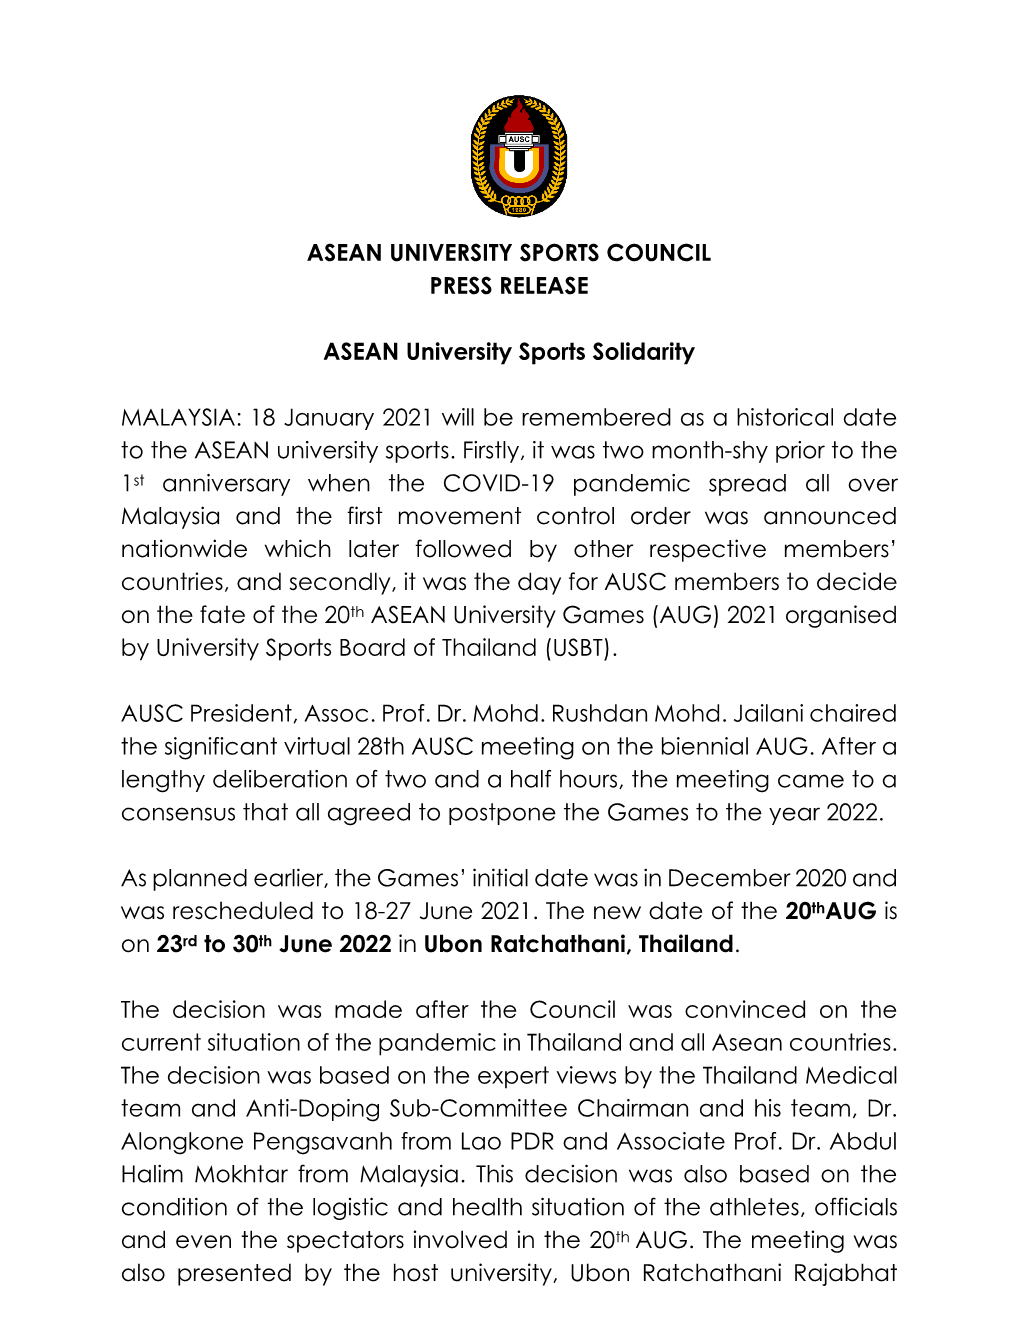 Asean University Sports Council Press Release